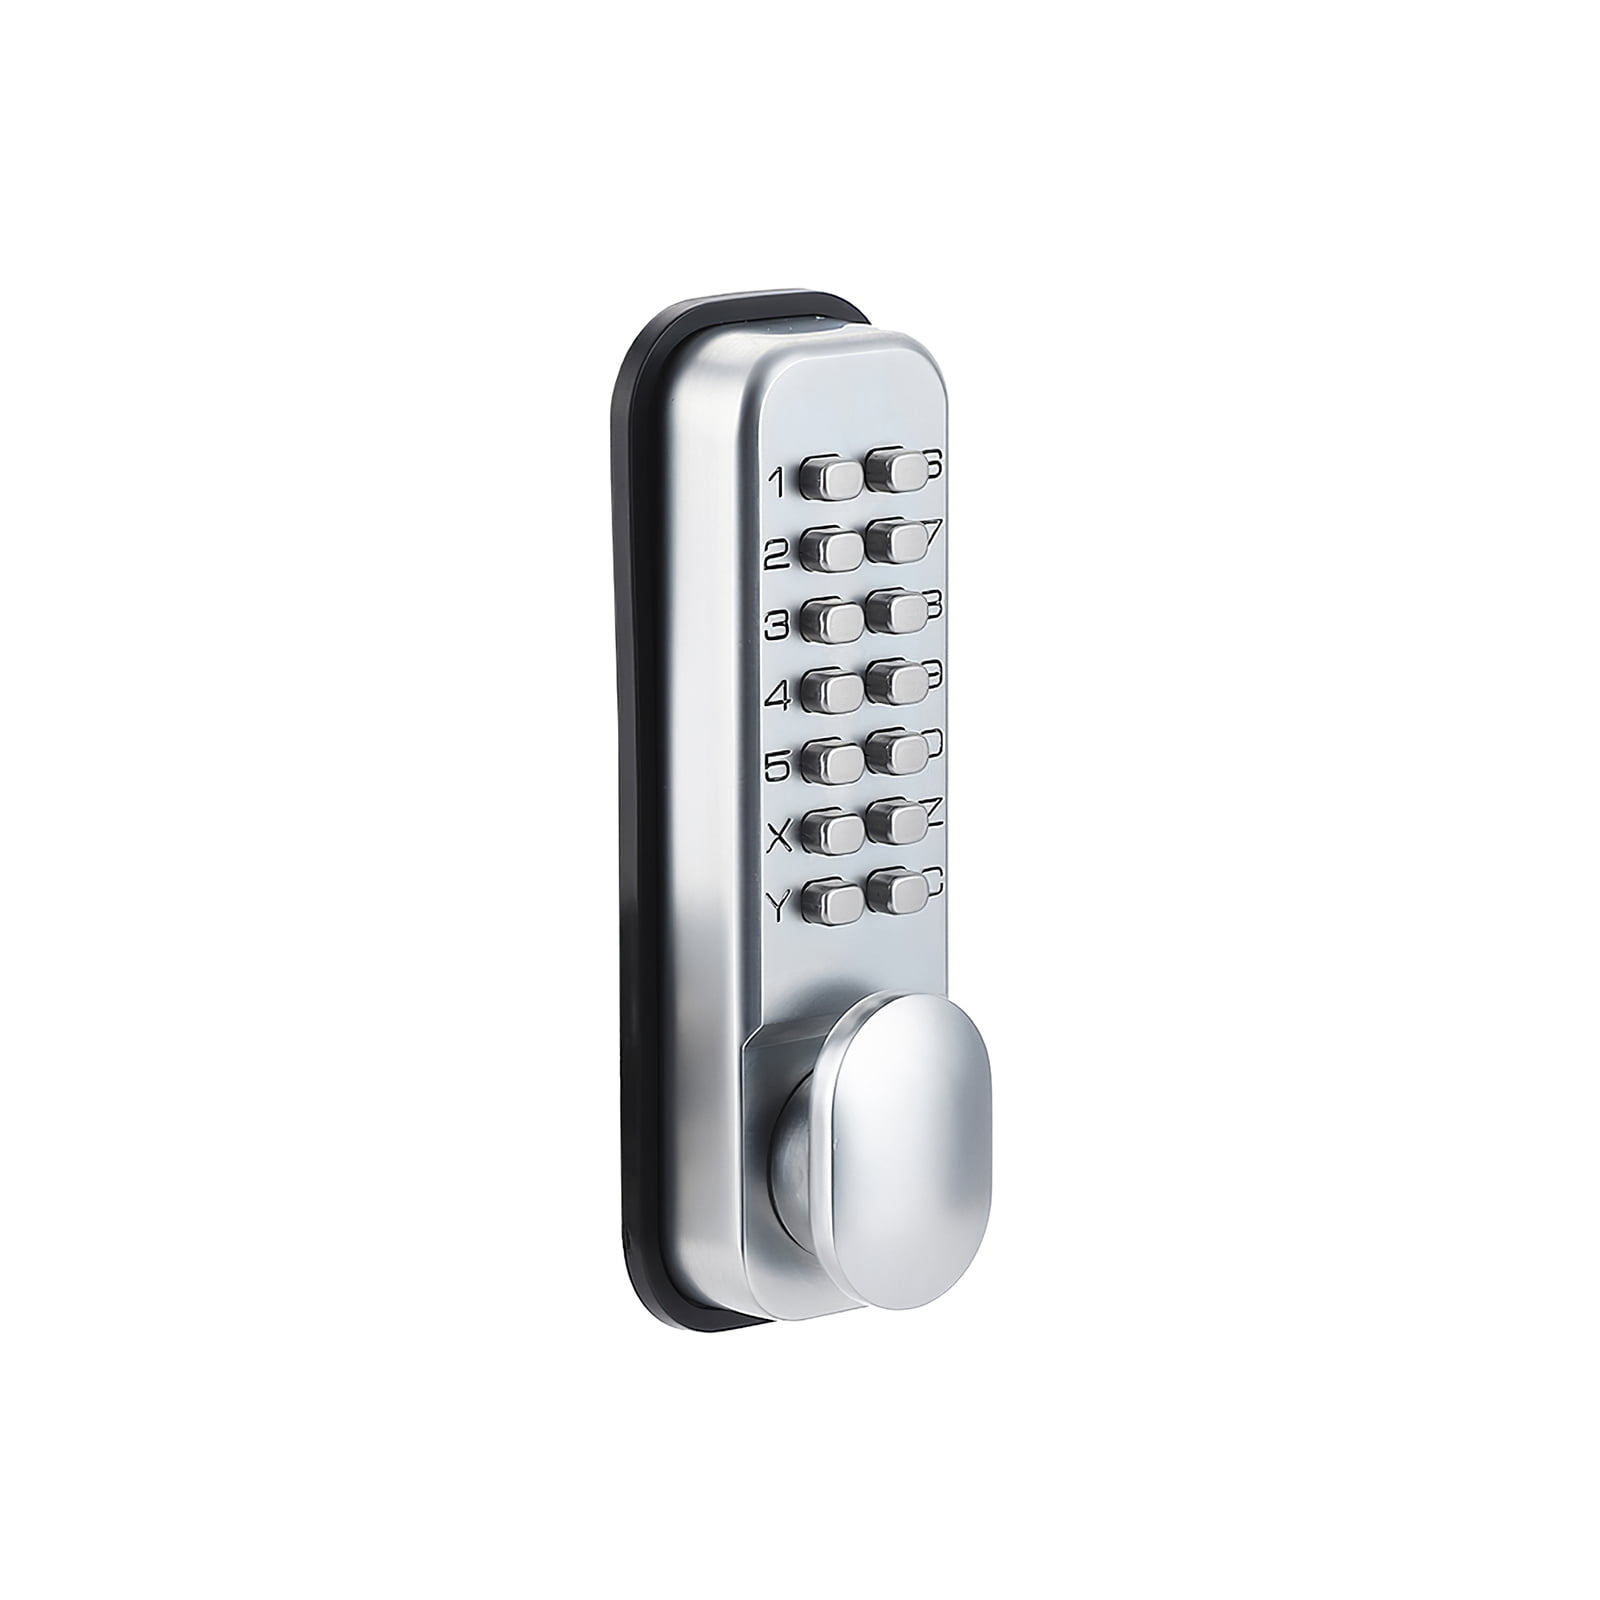 Keypad Security Digital Code Door Lock Push Button Entry Handle 